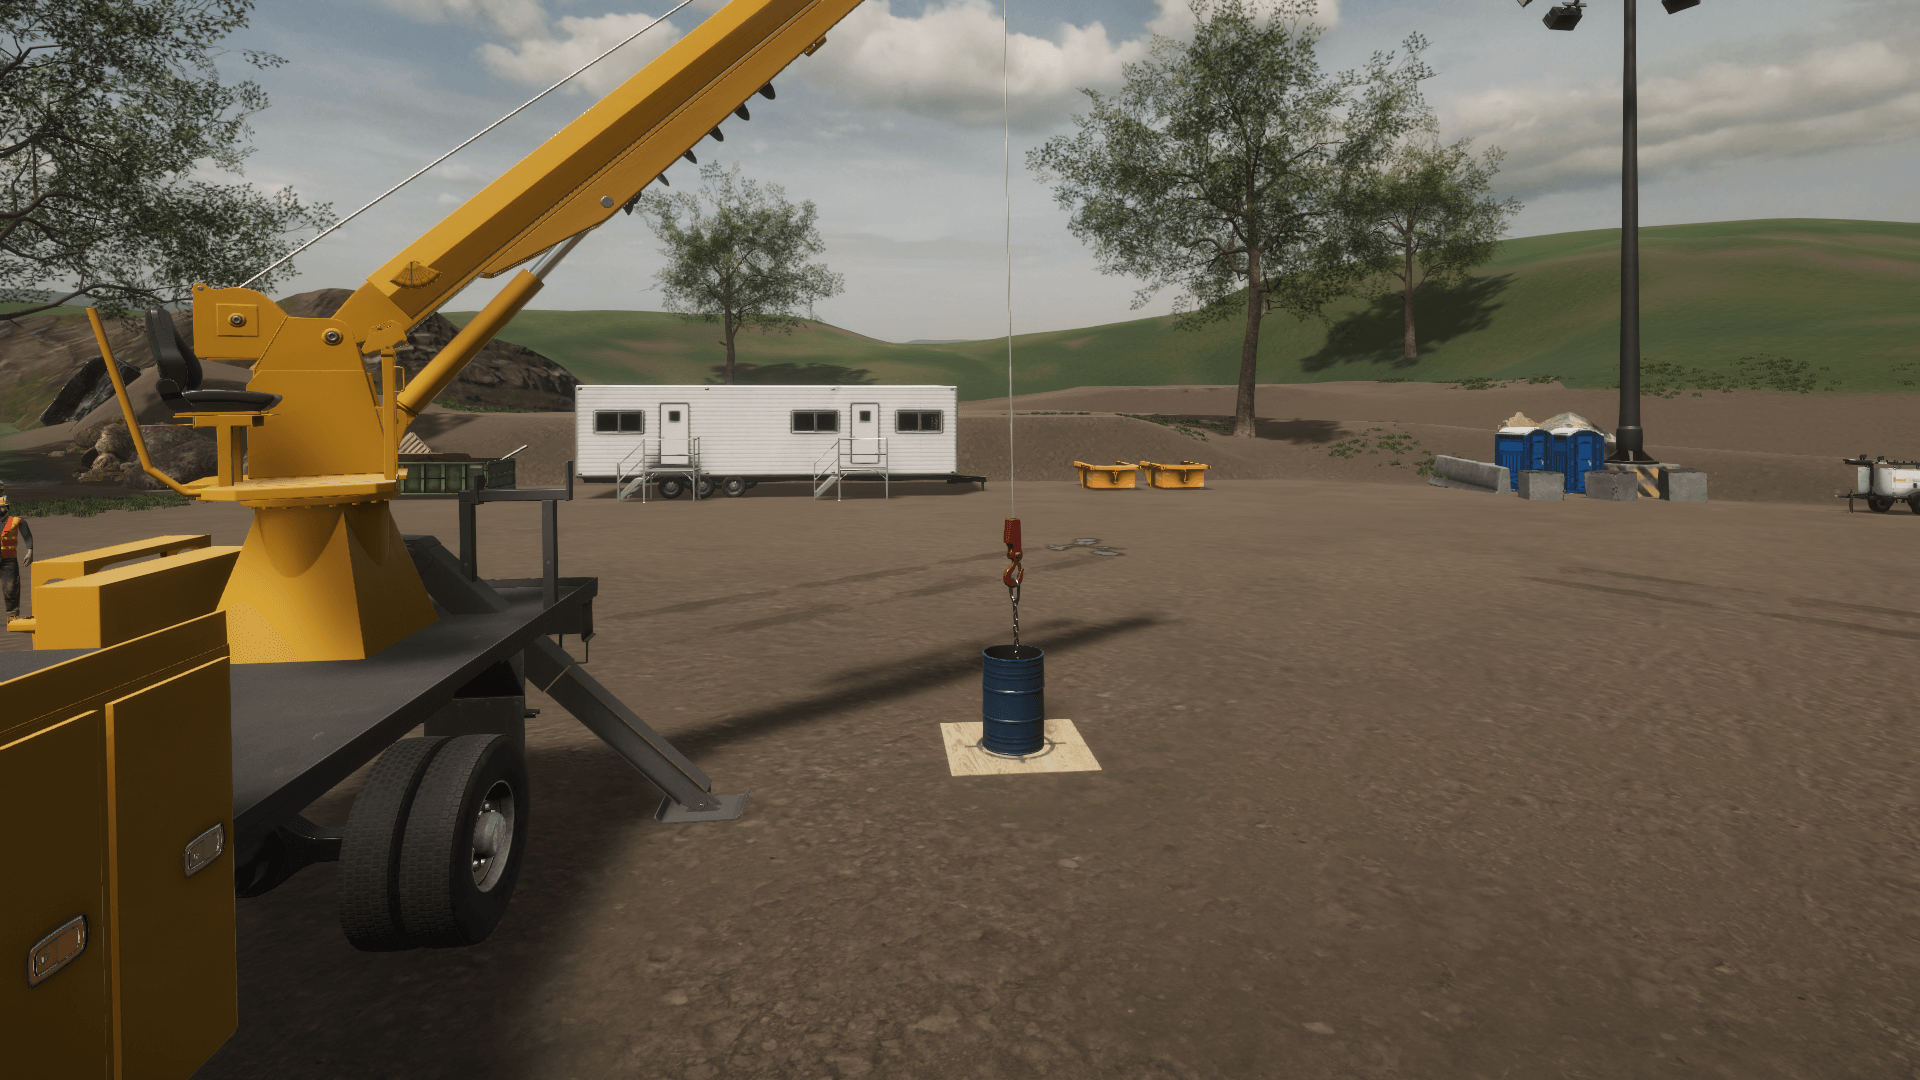 Digger Derrick Simulator Training Pack – Chain in Barrel Exercise